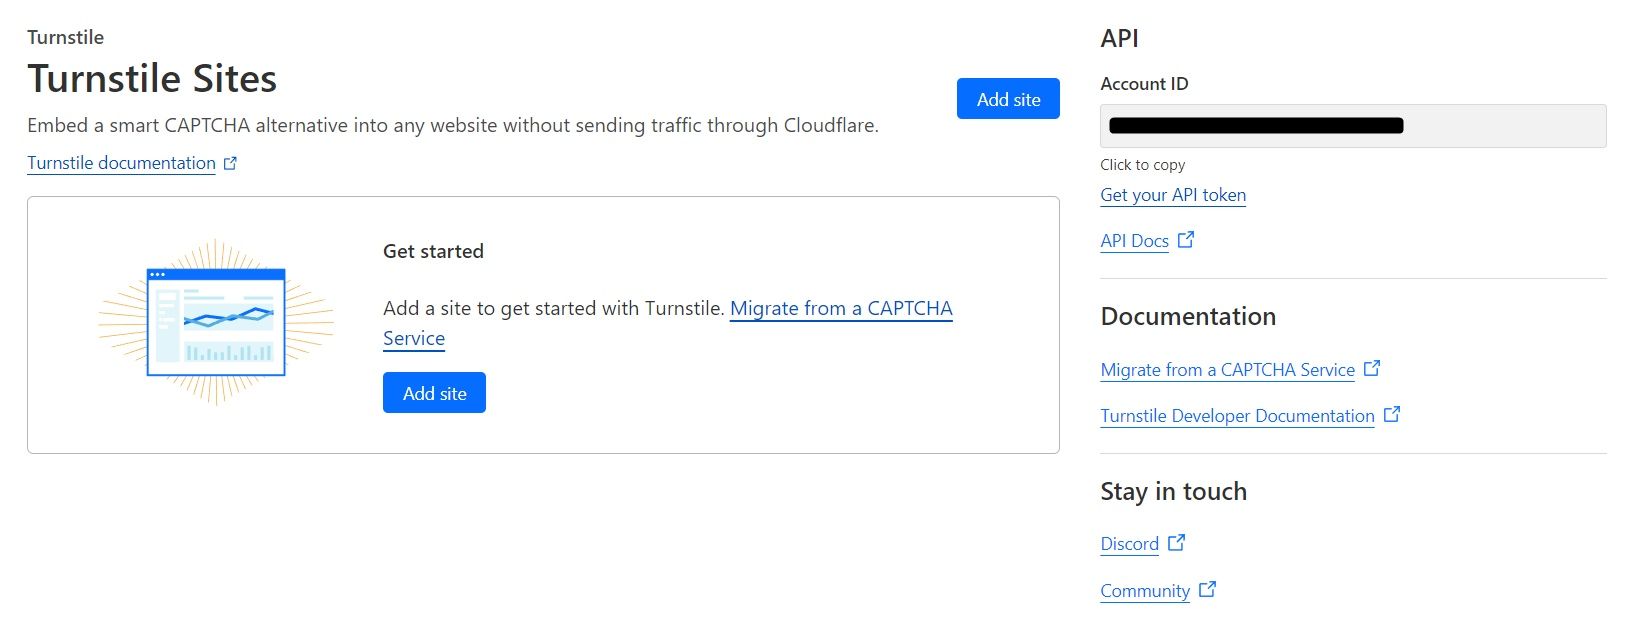 turnsite sites cloudflare dashboard screenshot